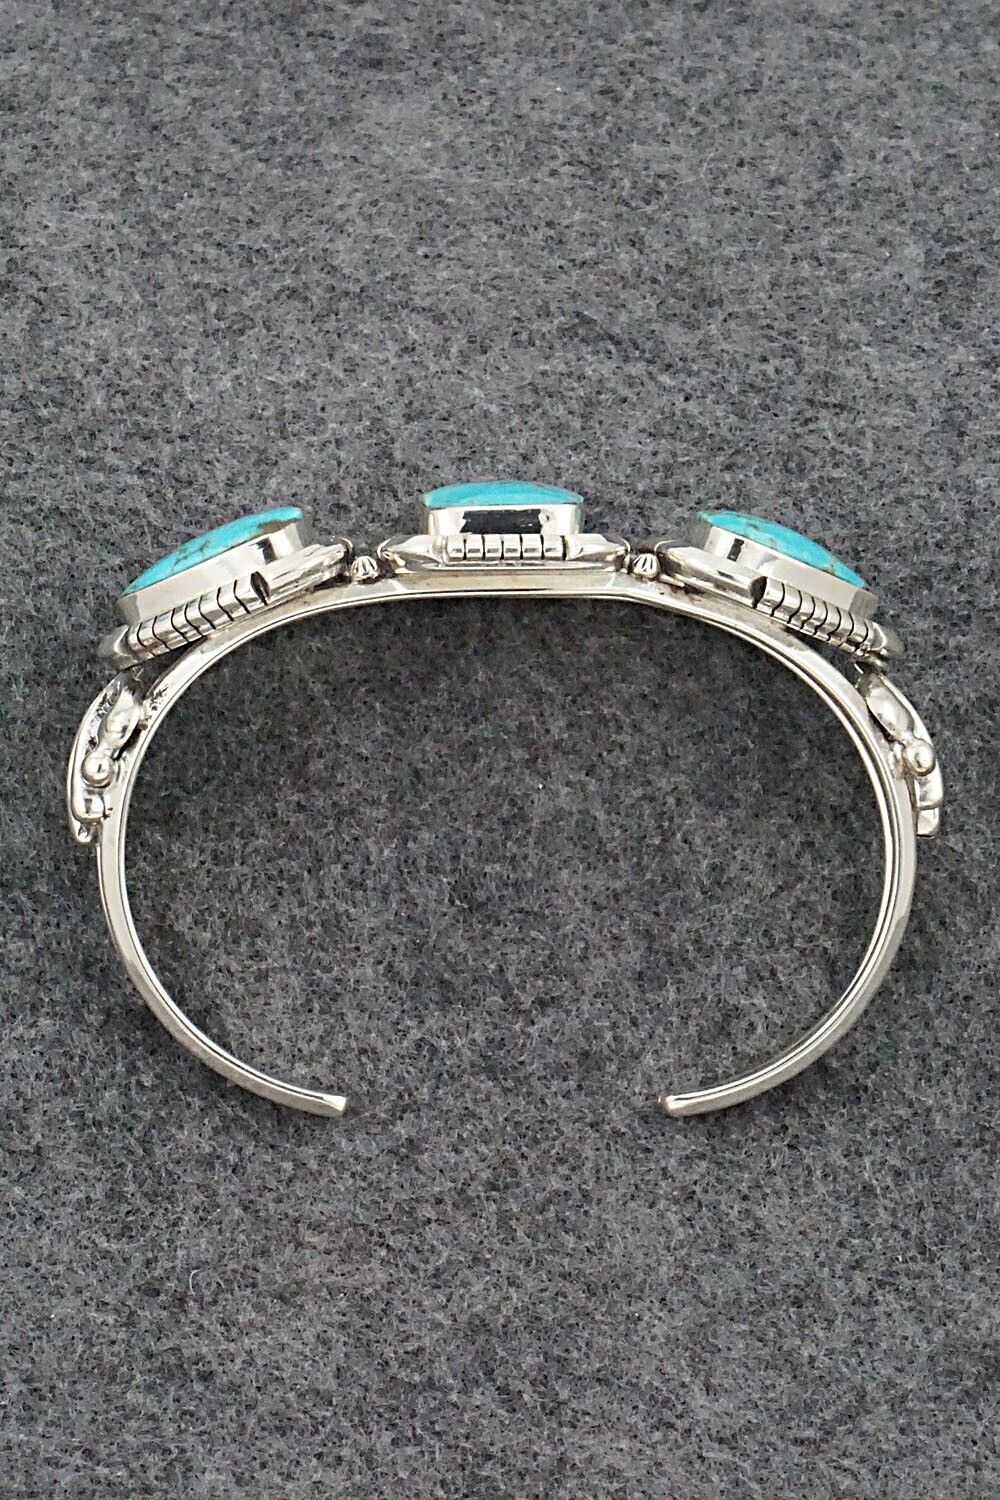 Turquoise & Sterling Silver Bracelet - Jimson Belin